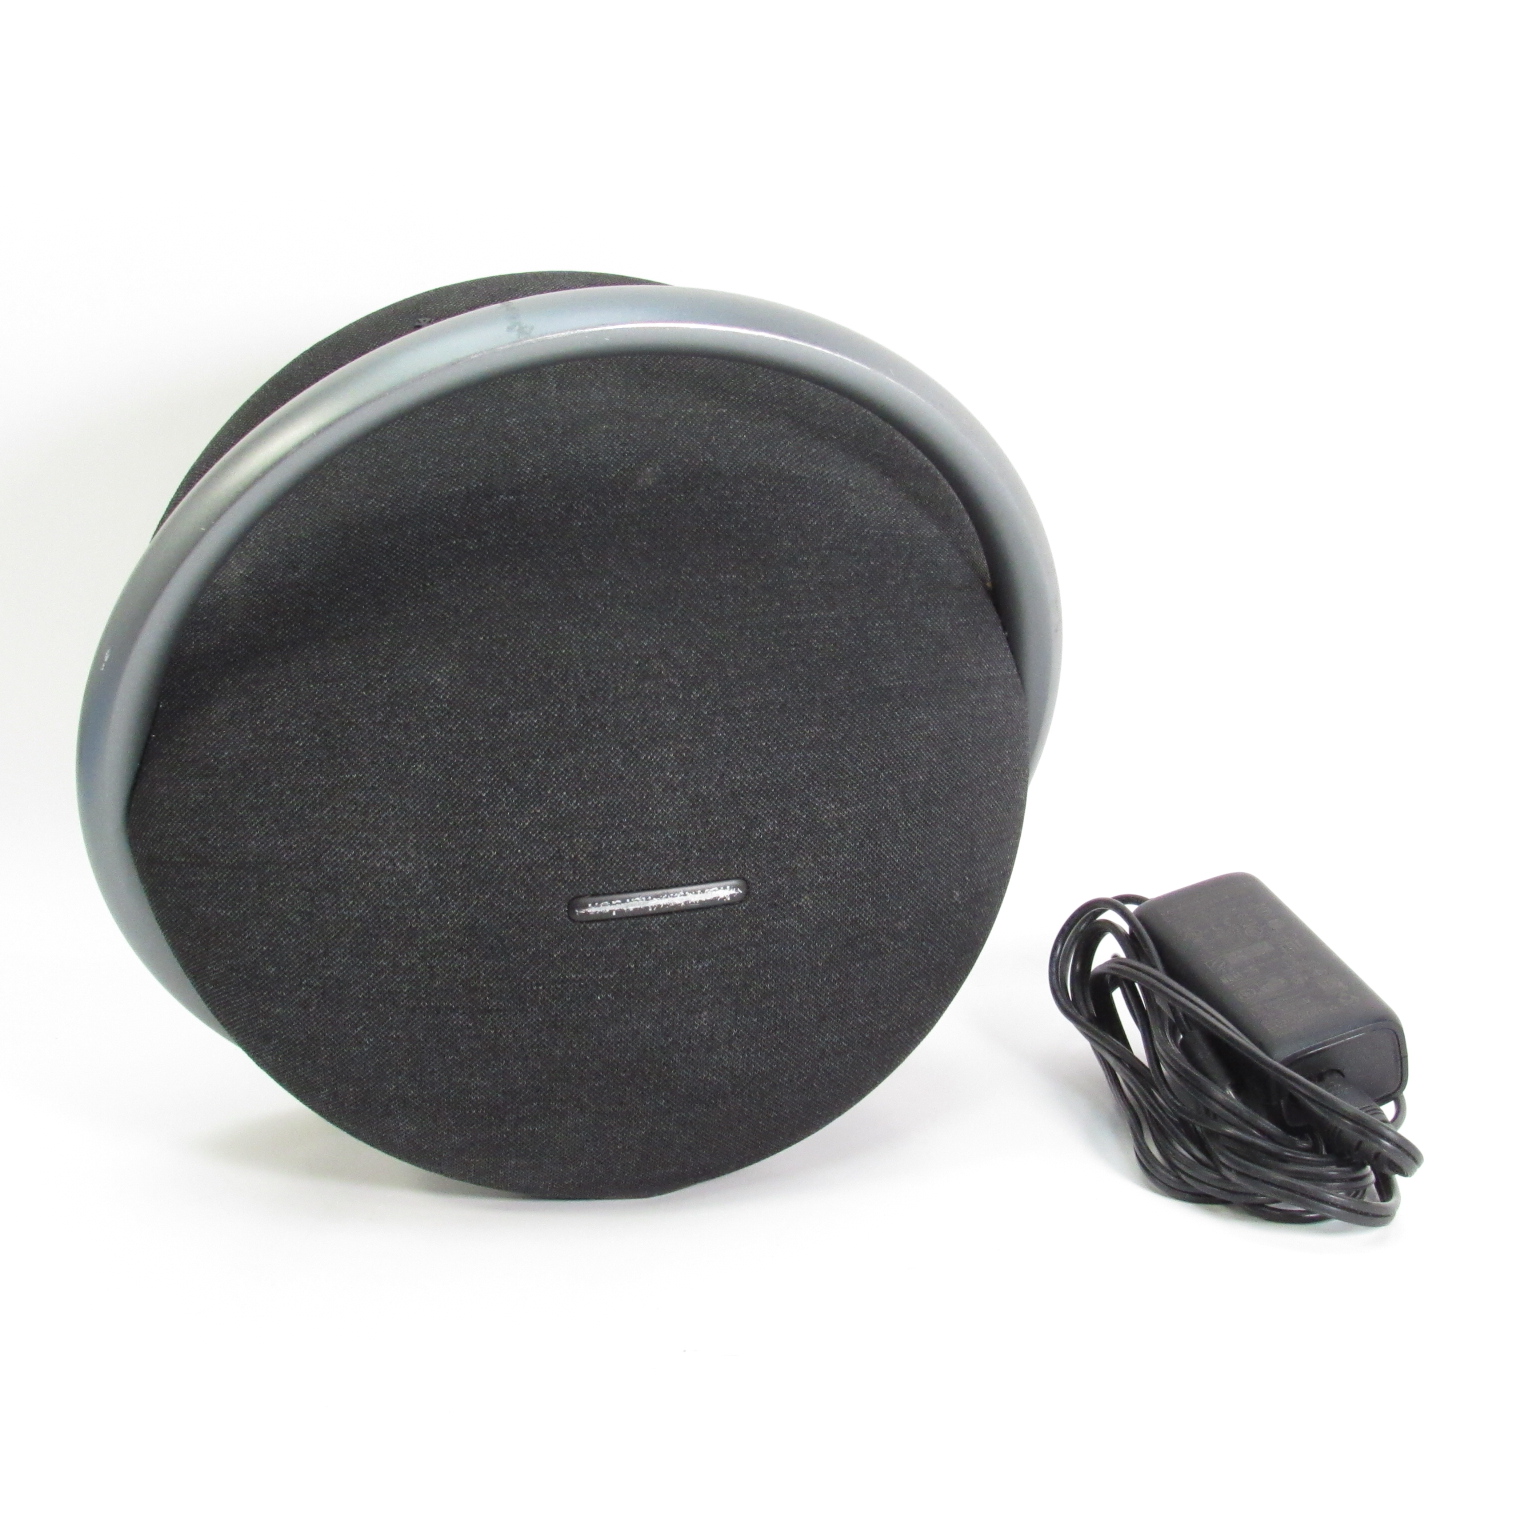 Harman Kardon Onyx Studio 7 Wireless Speaker (Black)